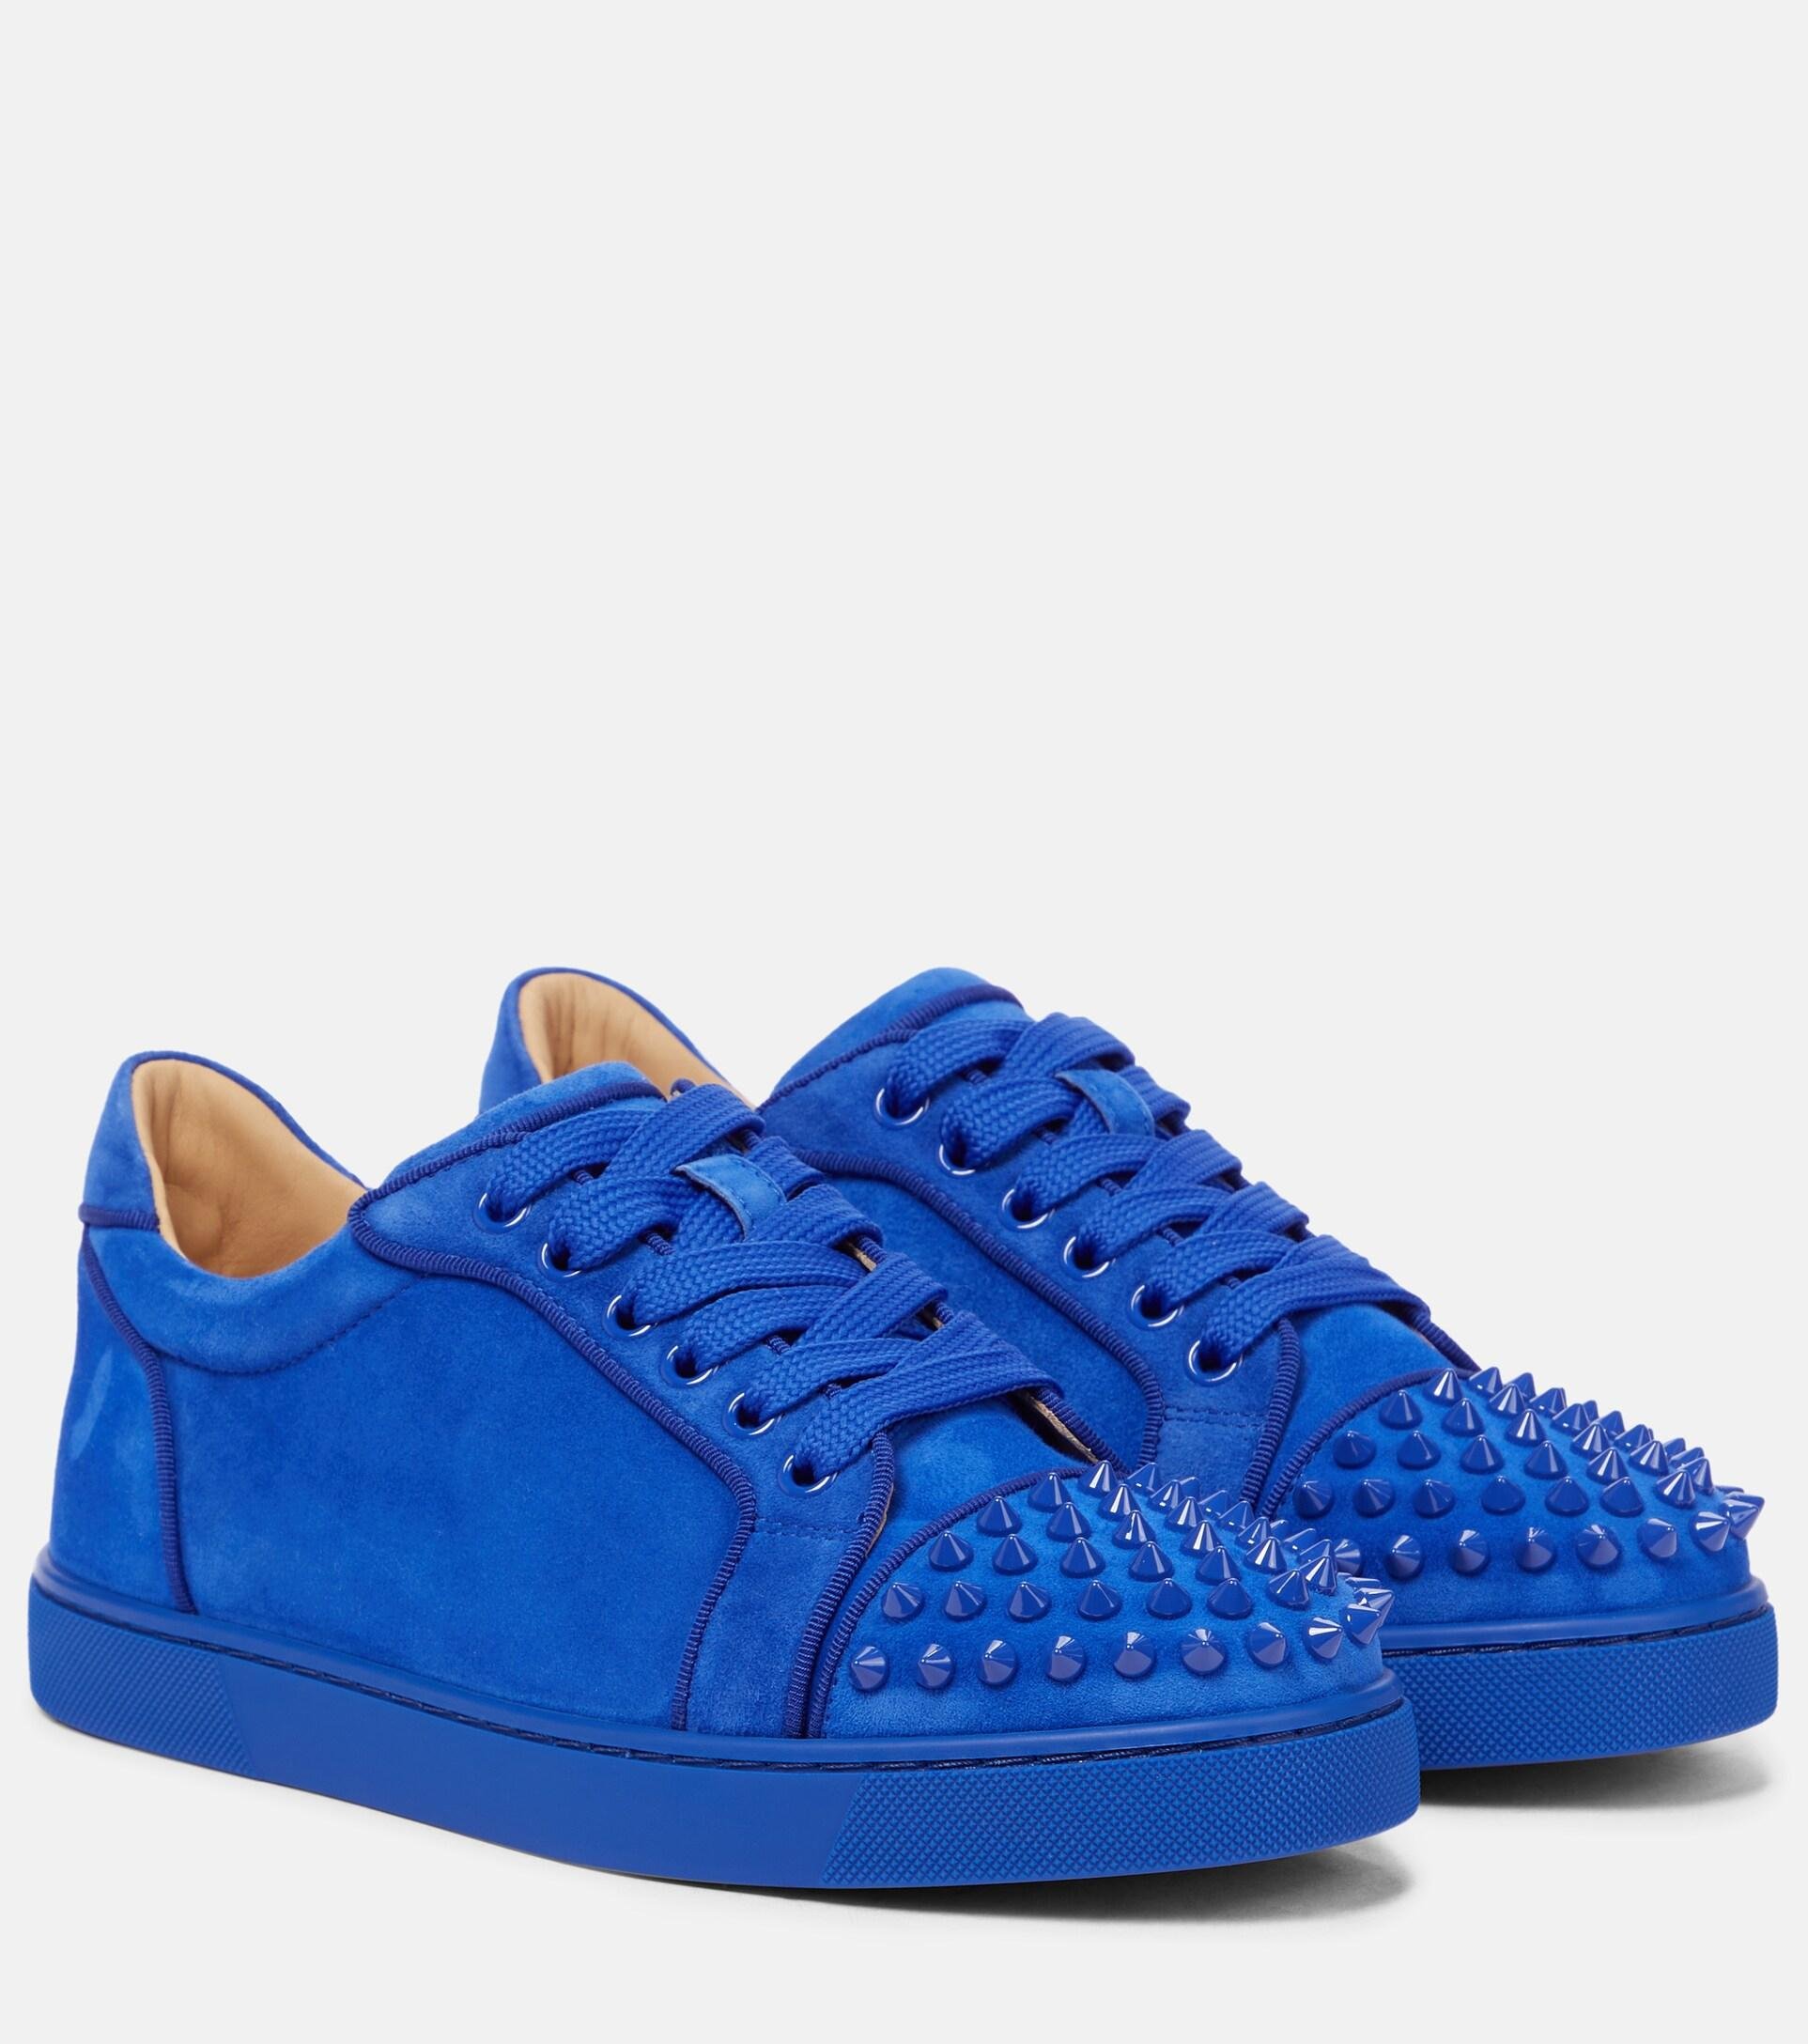 Christian Louboutin, Vieira 2 orlato navy blue suede sneakers